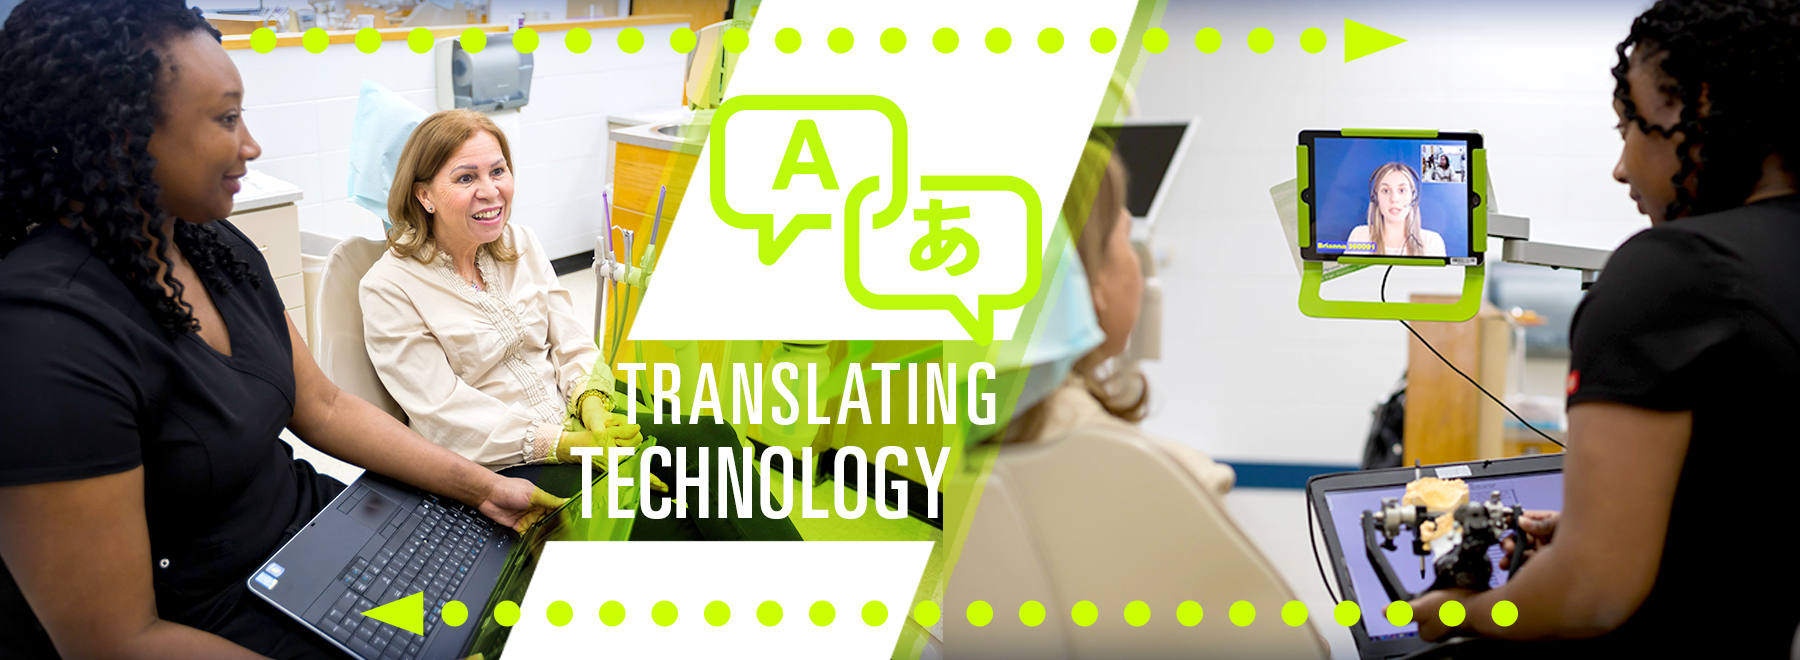 Translating technology